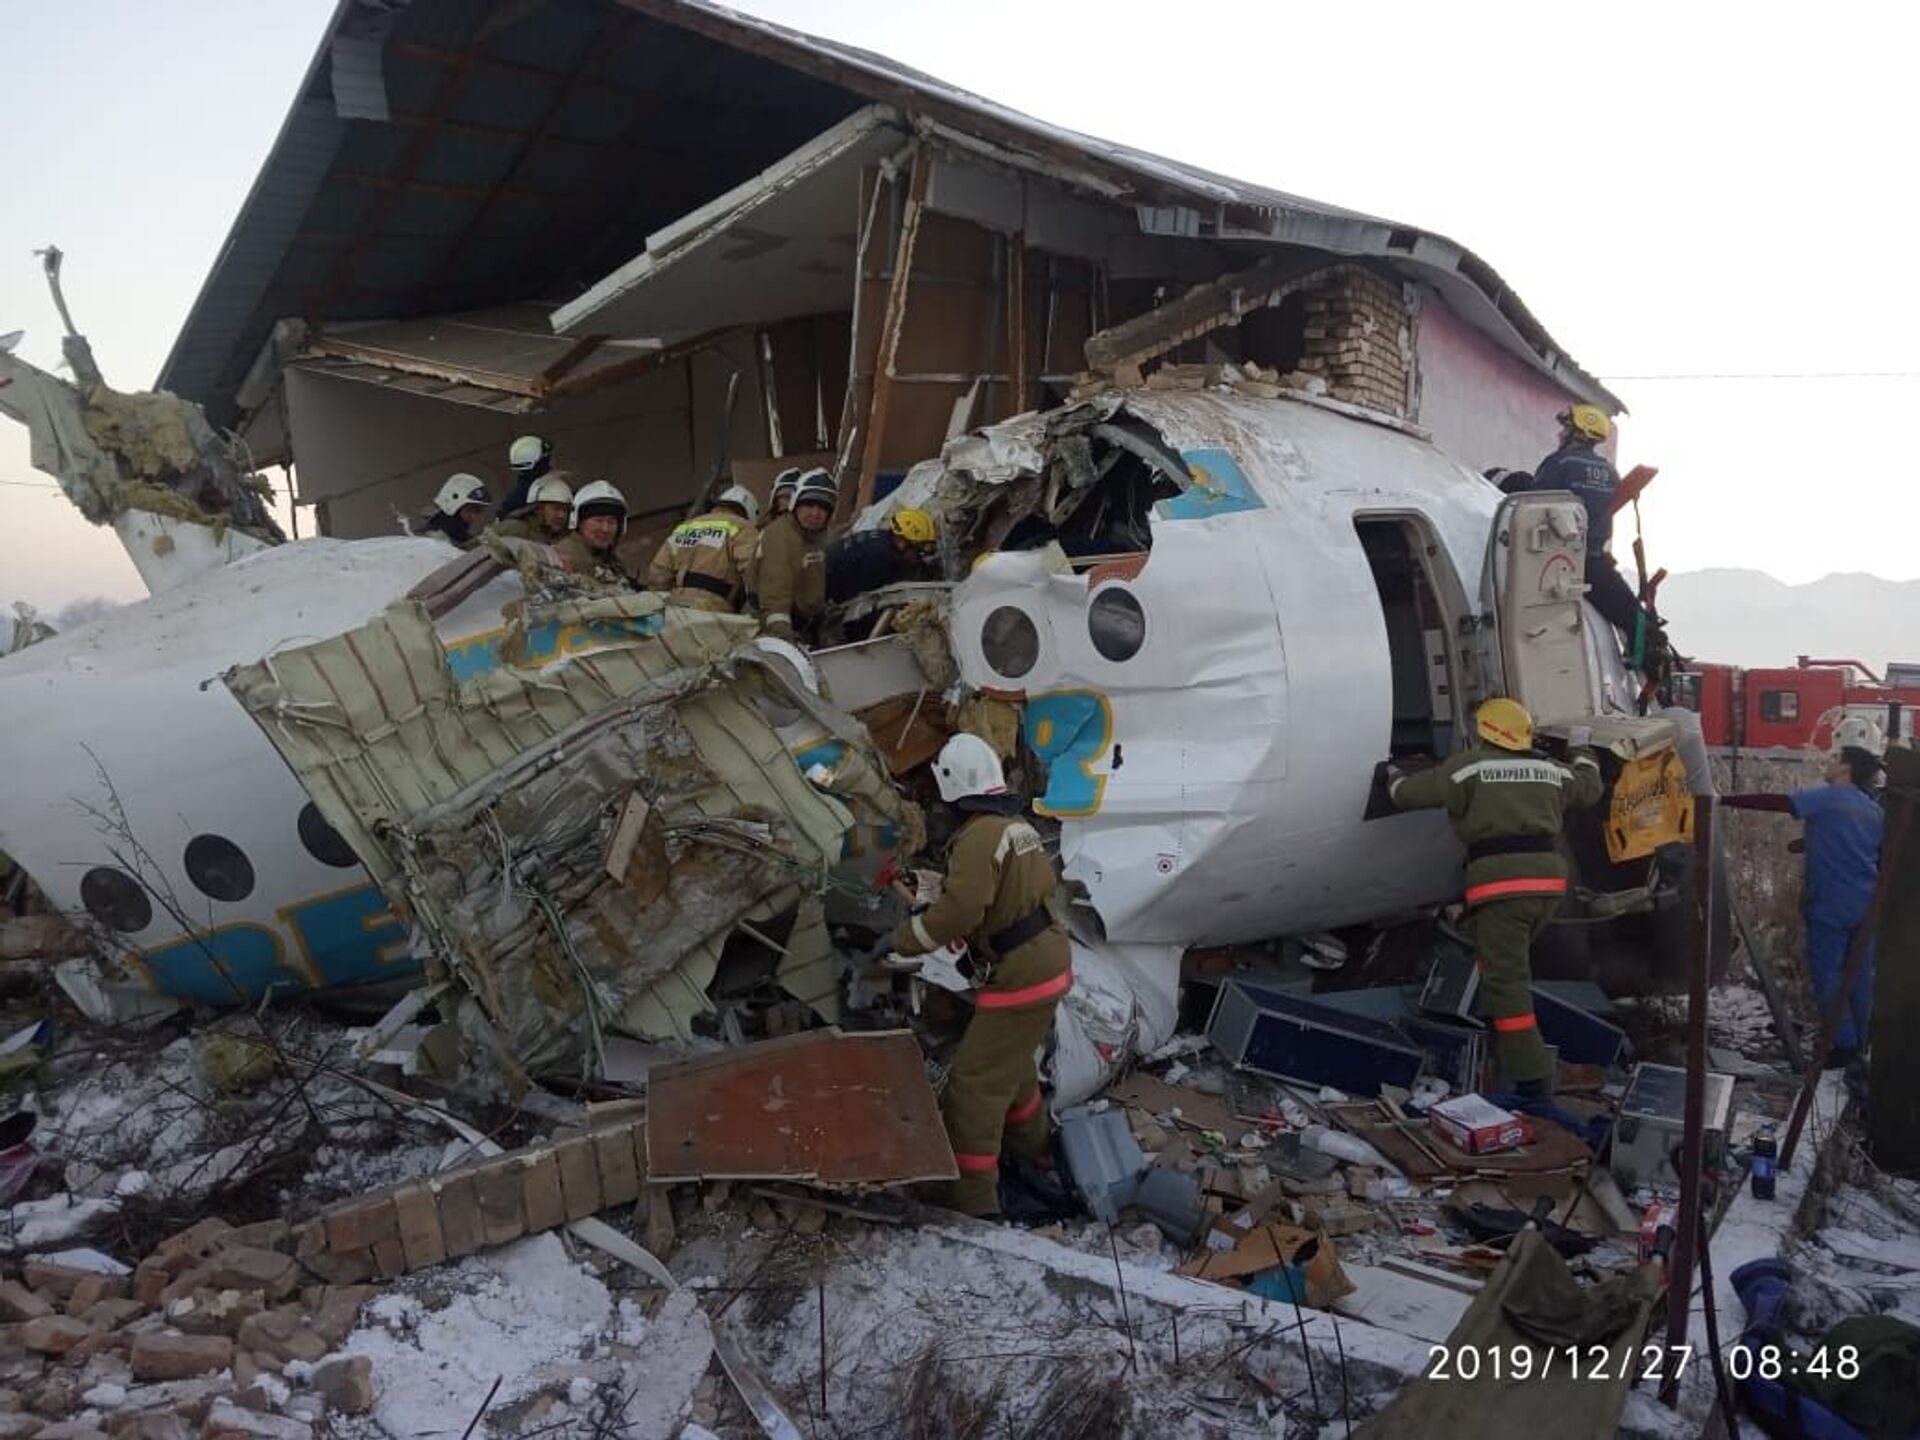 Авиакатастрофа сейчас. Катастрофа ту-154 в Алма-Ате. Air Fokker 100 bek авиакатастрофа. Катастрофа Fokker 100 под Алма-атой.